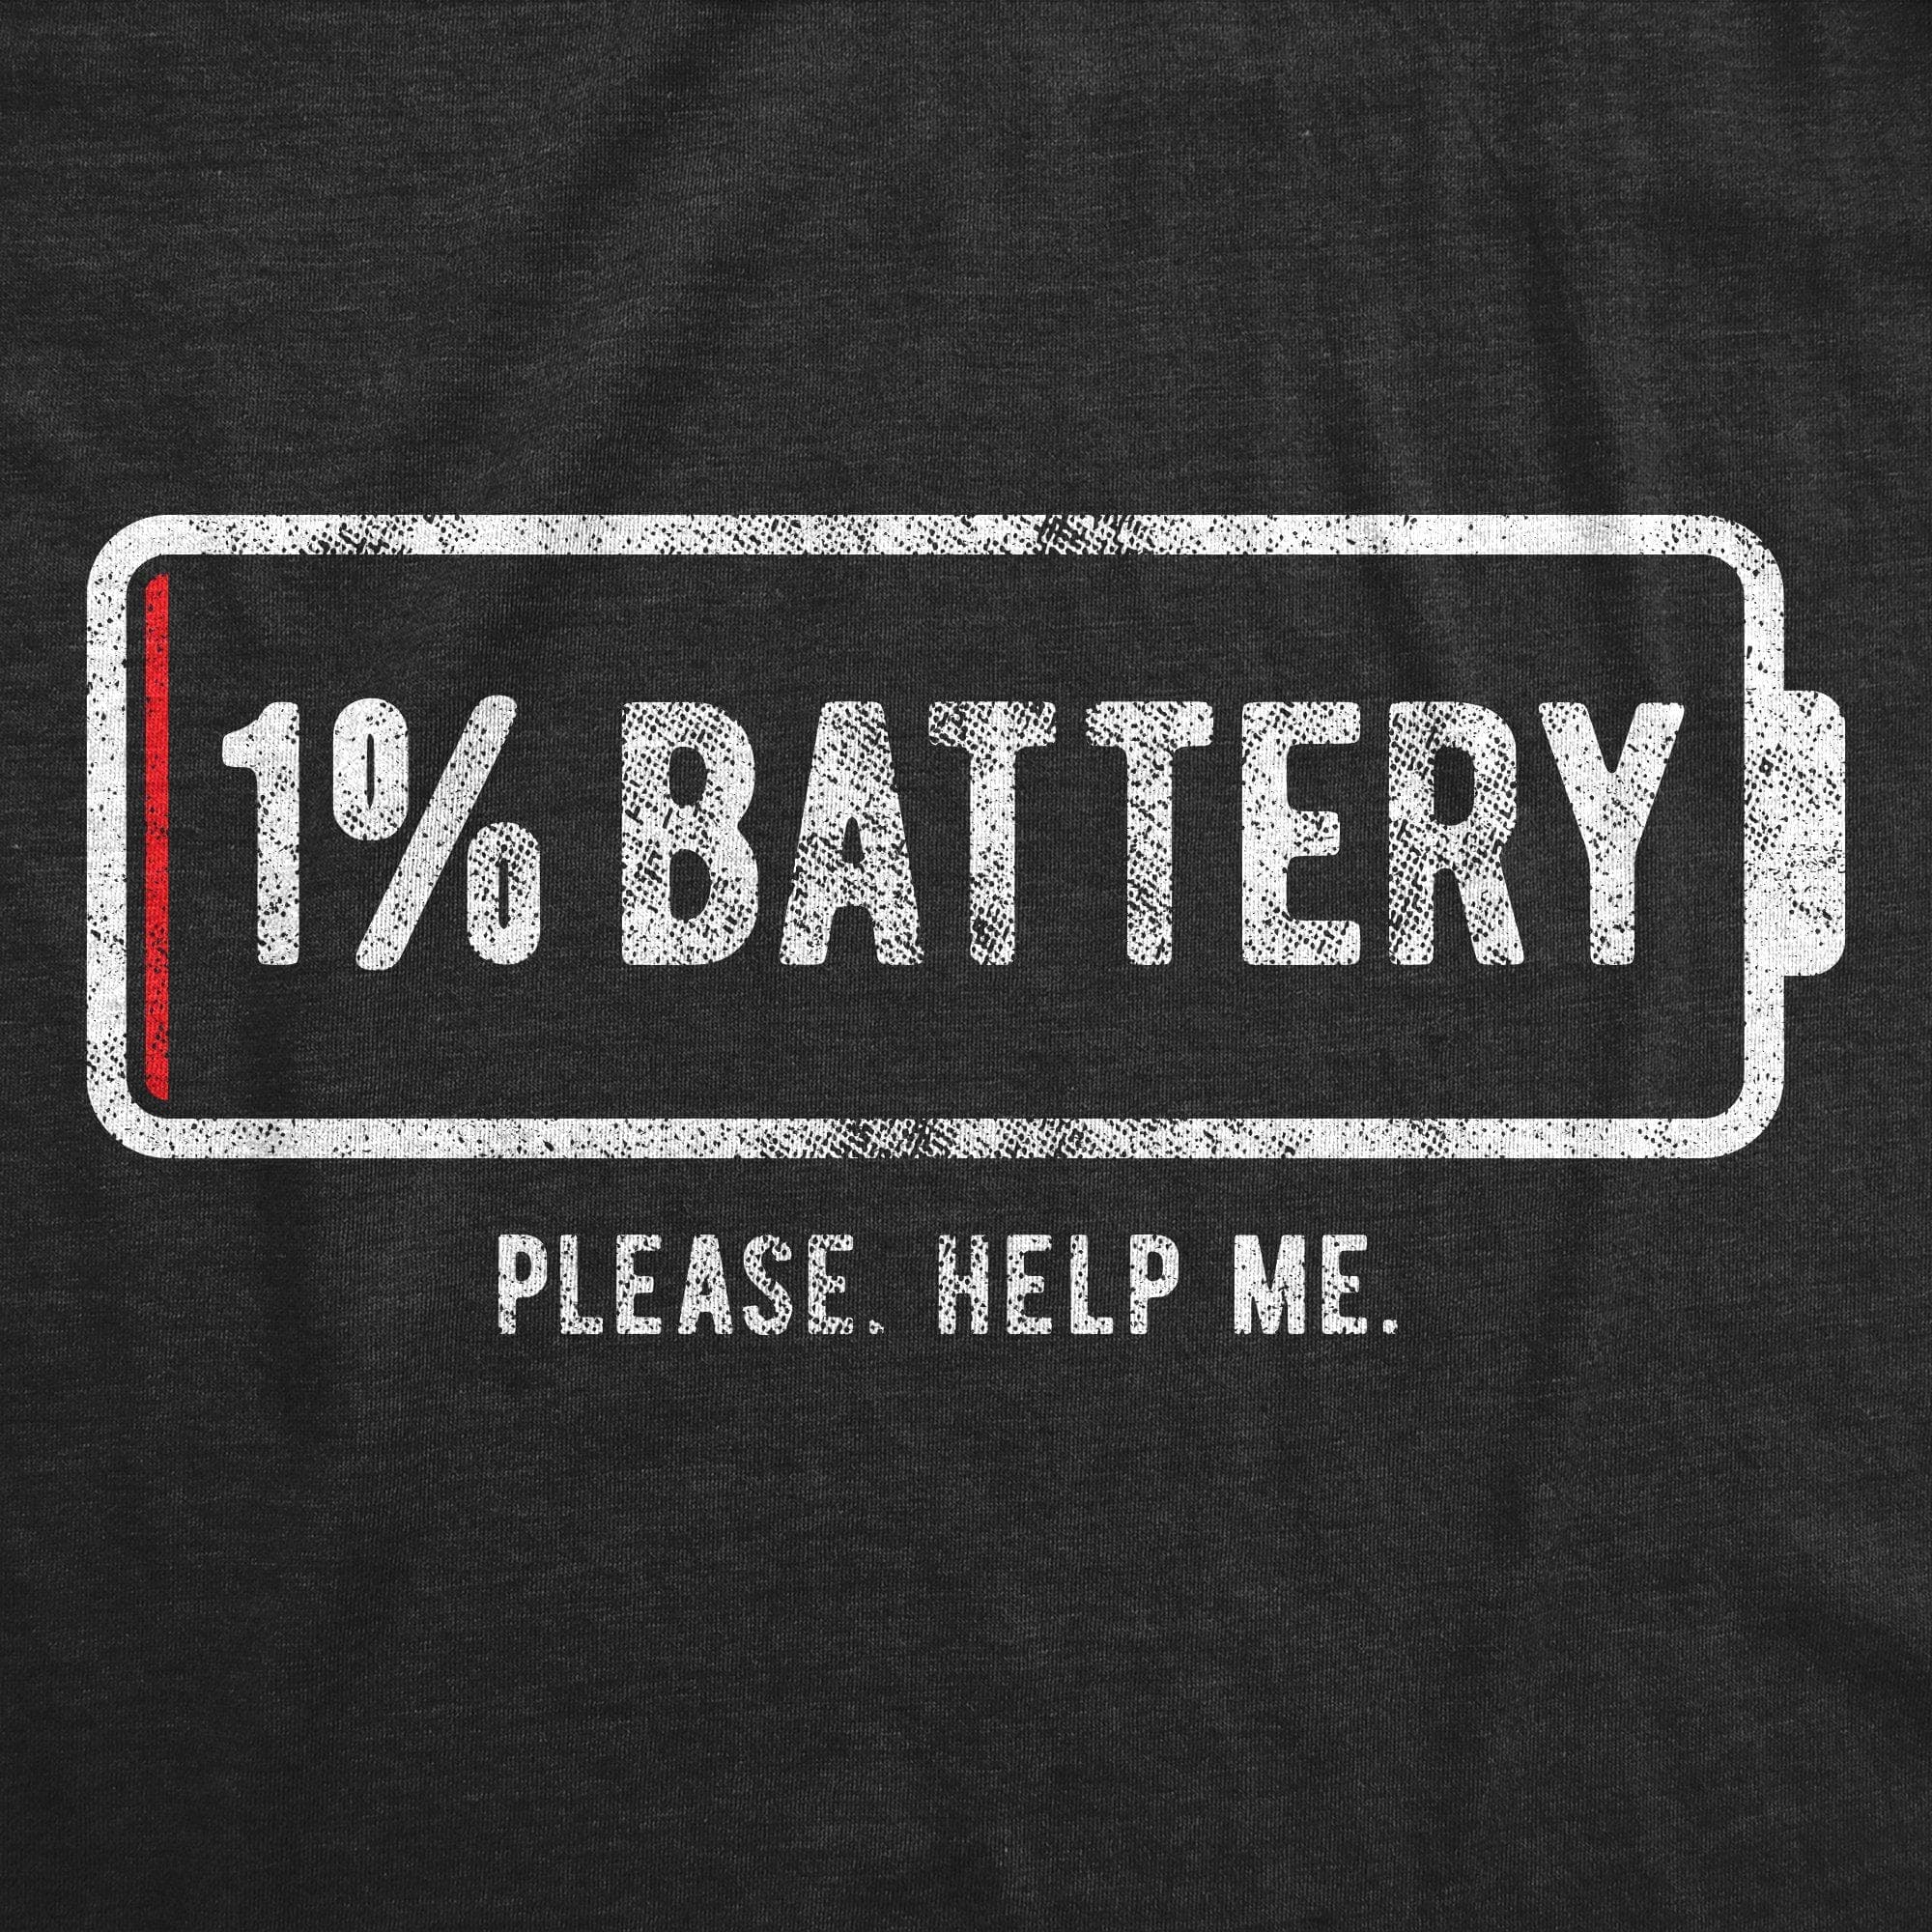 1% Battery Men's Tshirt - Crazy Dog T-Shirts